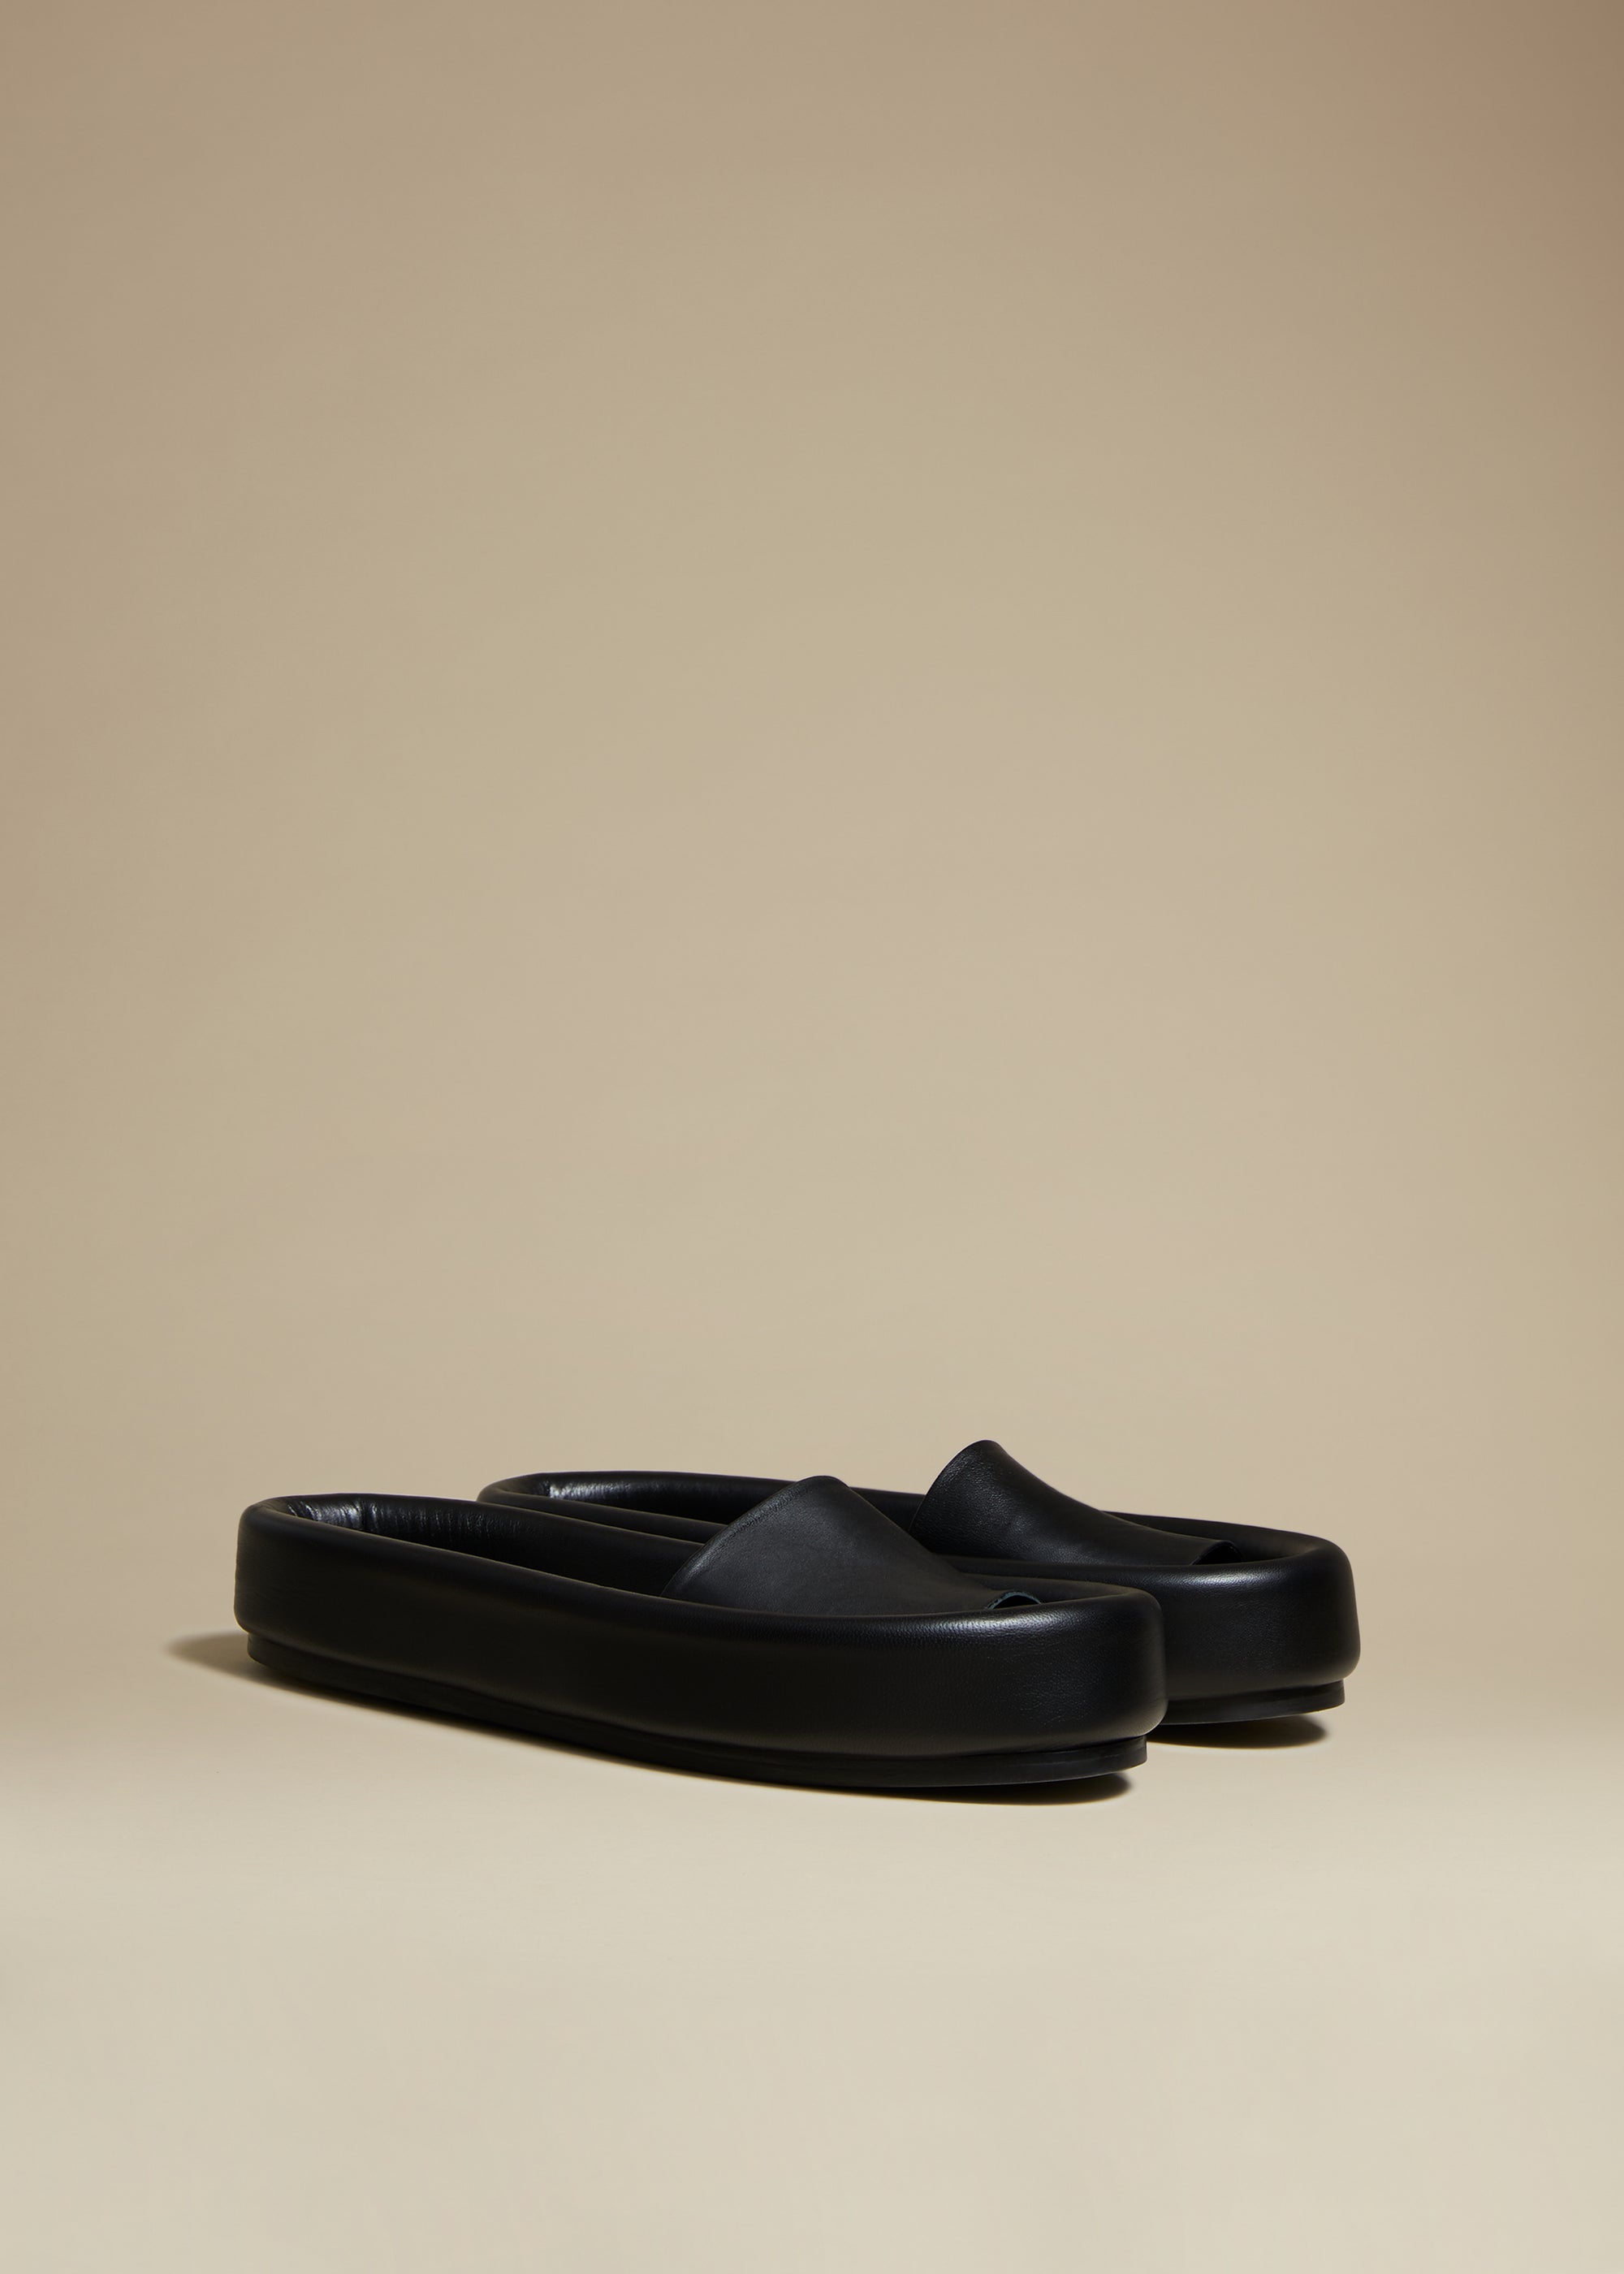 Venice sandal in leather - Black